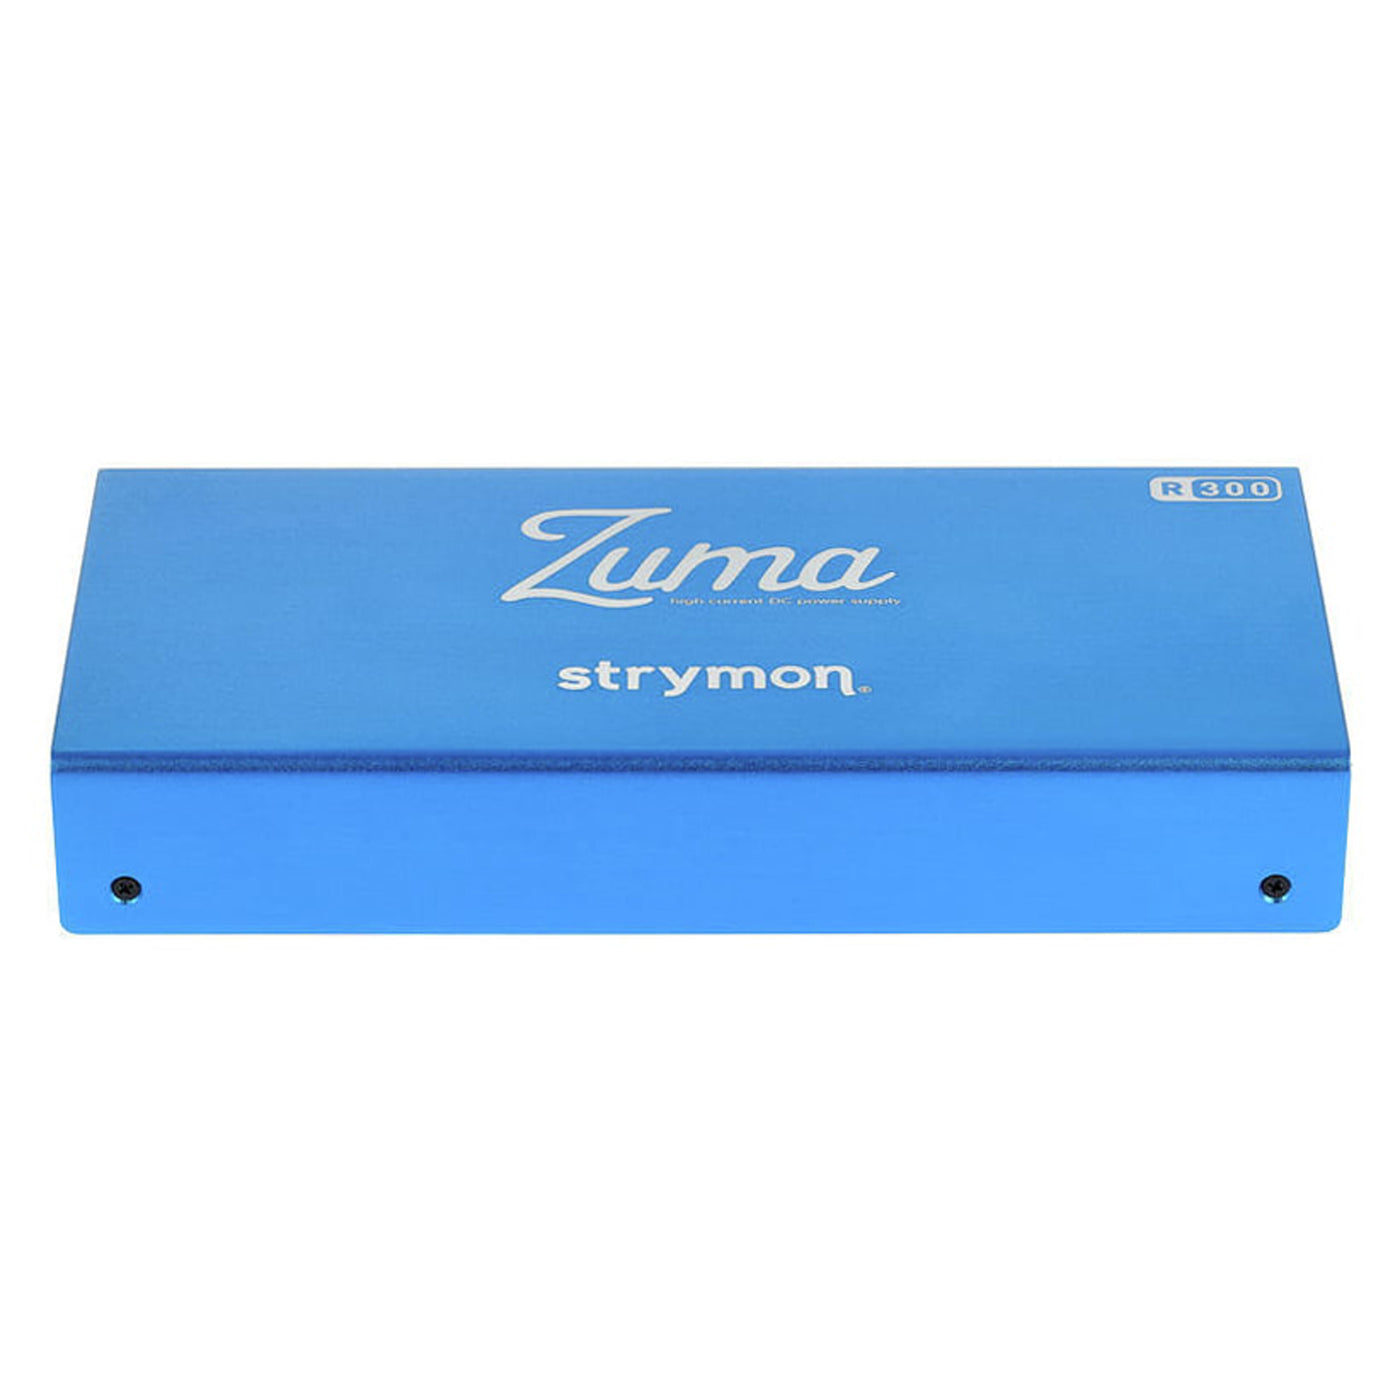 Strymon Zuma R300 Power Supply – Motor City Guitar